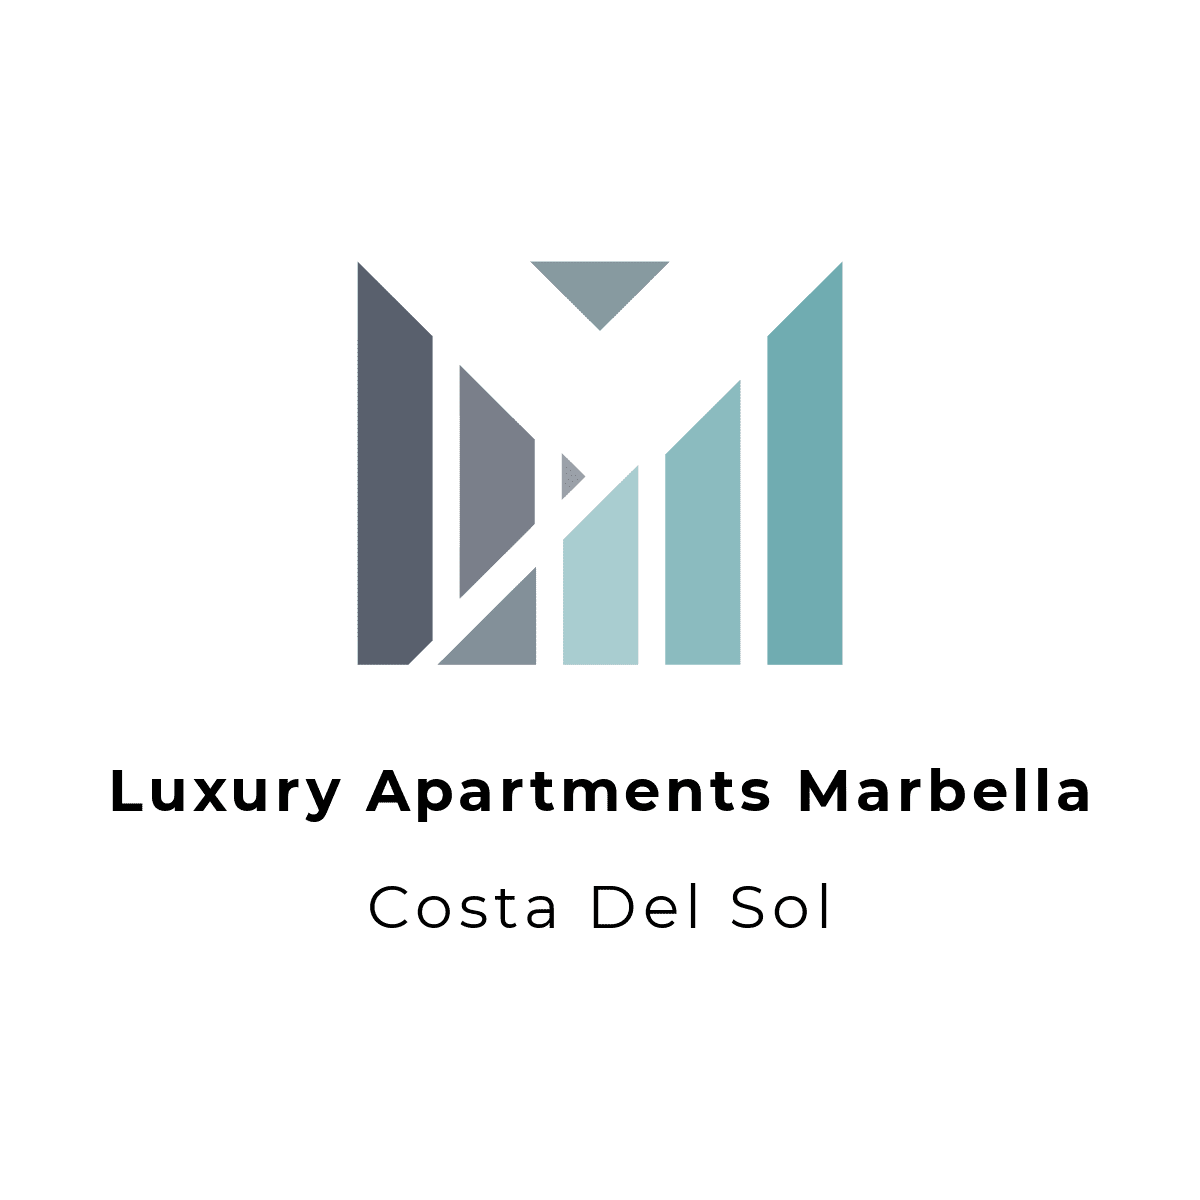 Luxury AM estate agents in Marbella